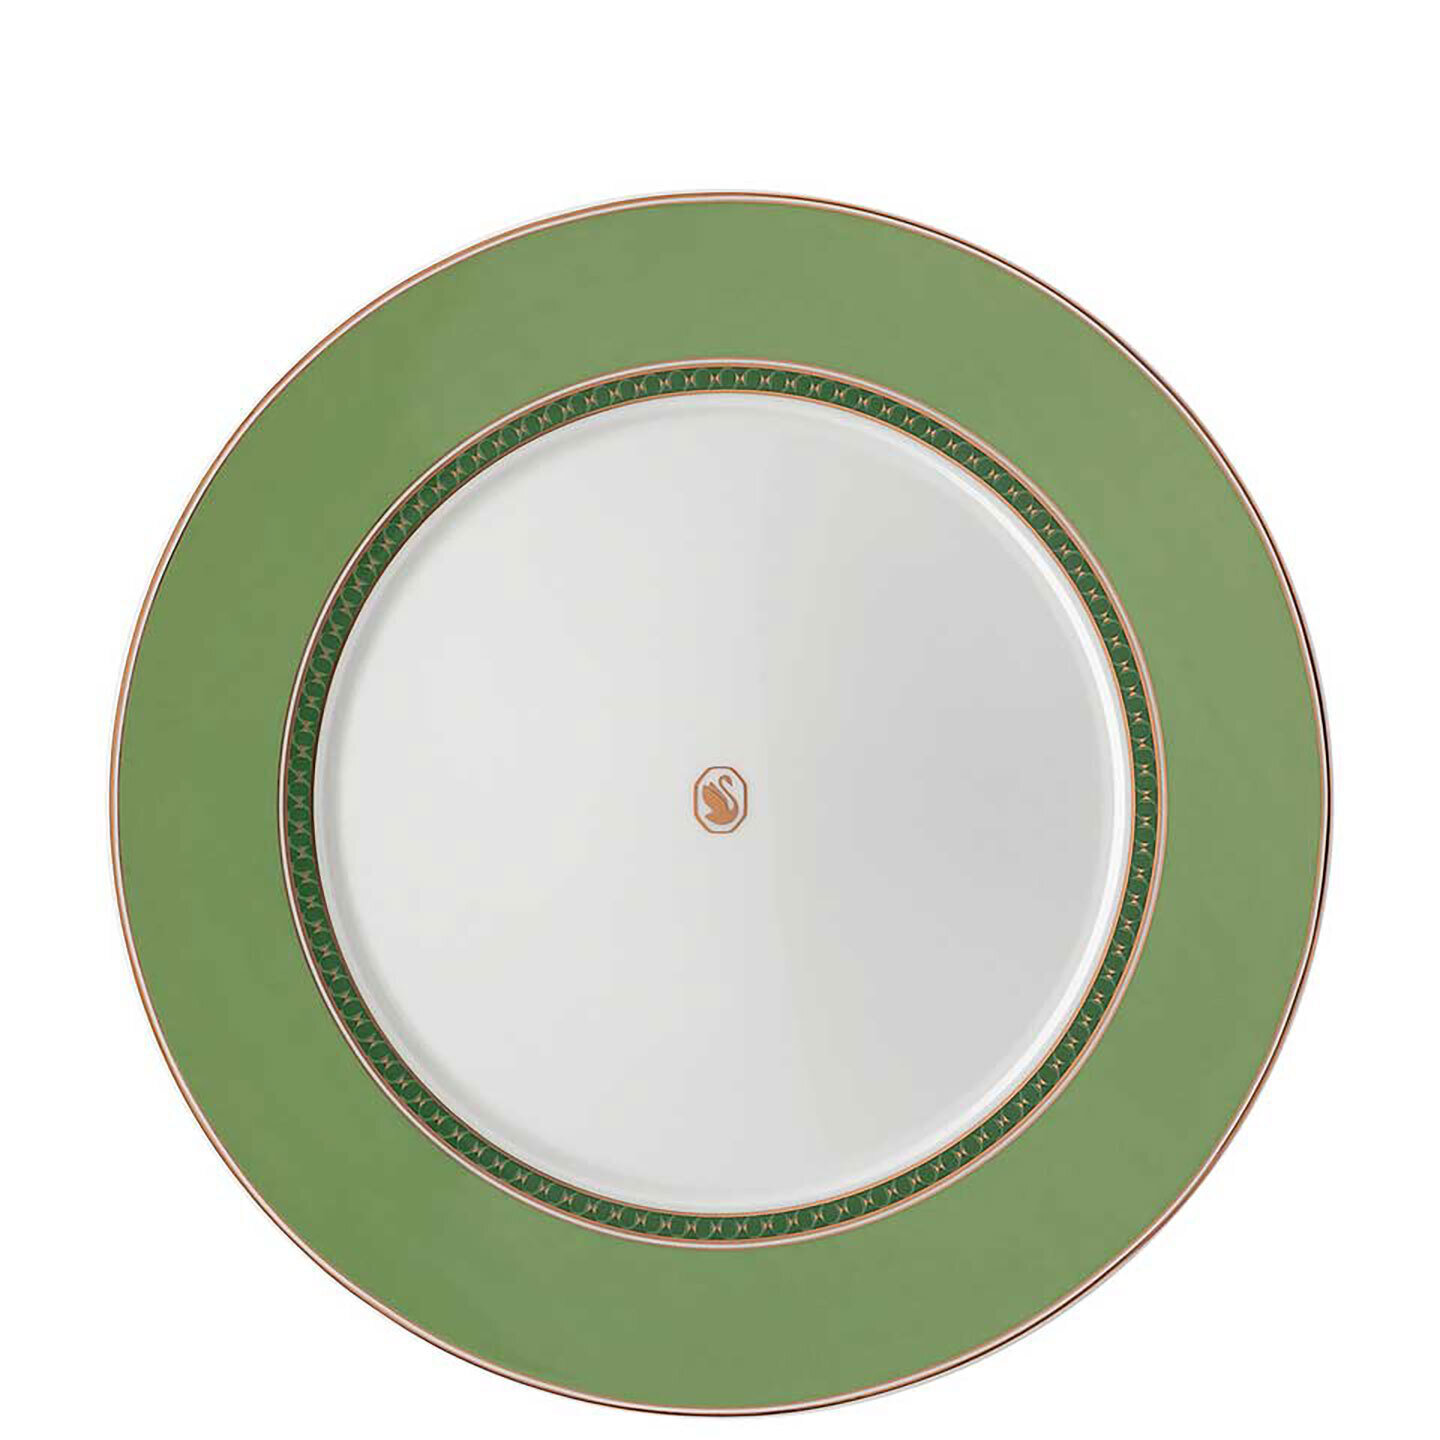 Rosenthal Swarovski Signum Dinner Plate 11 1/2 Inch Fern Green 10470-426349-10249